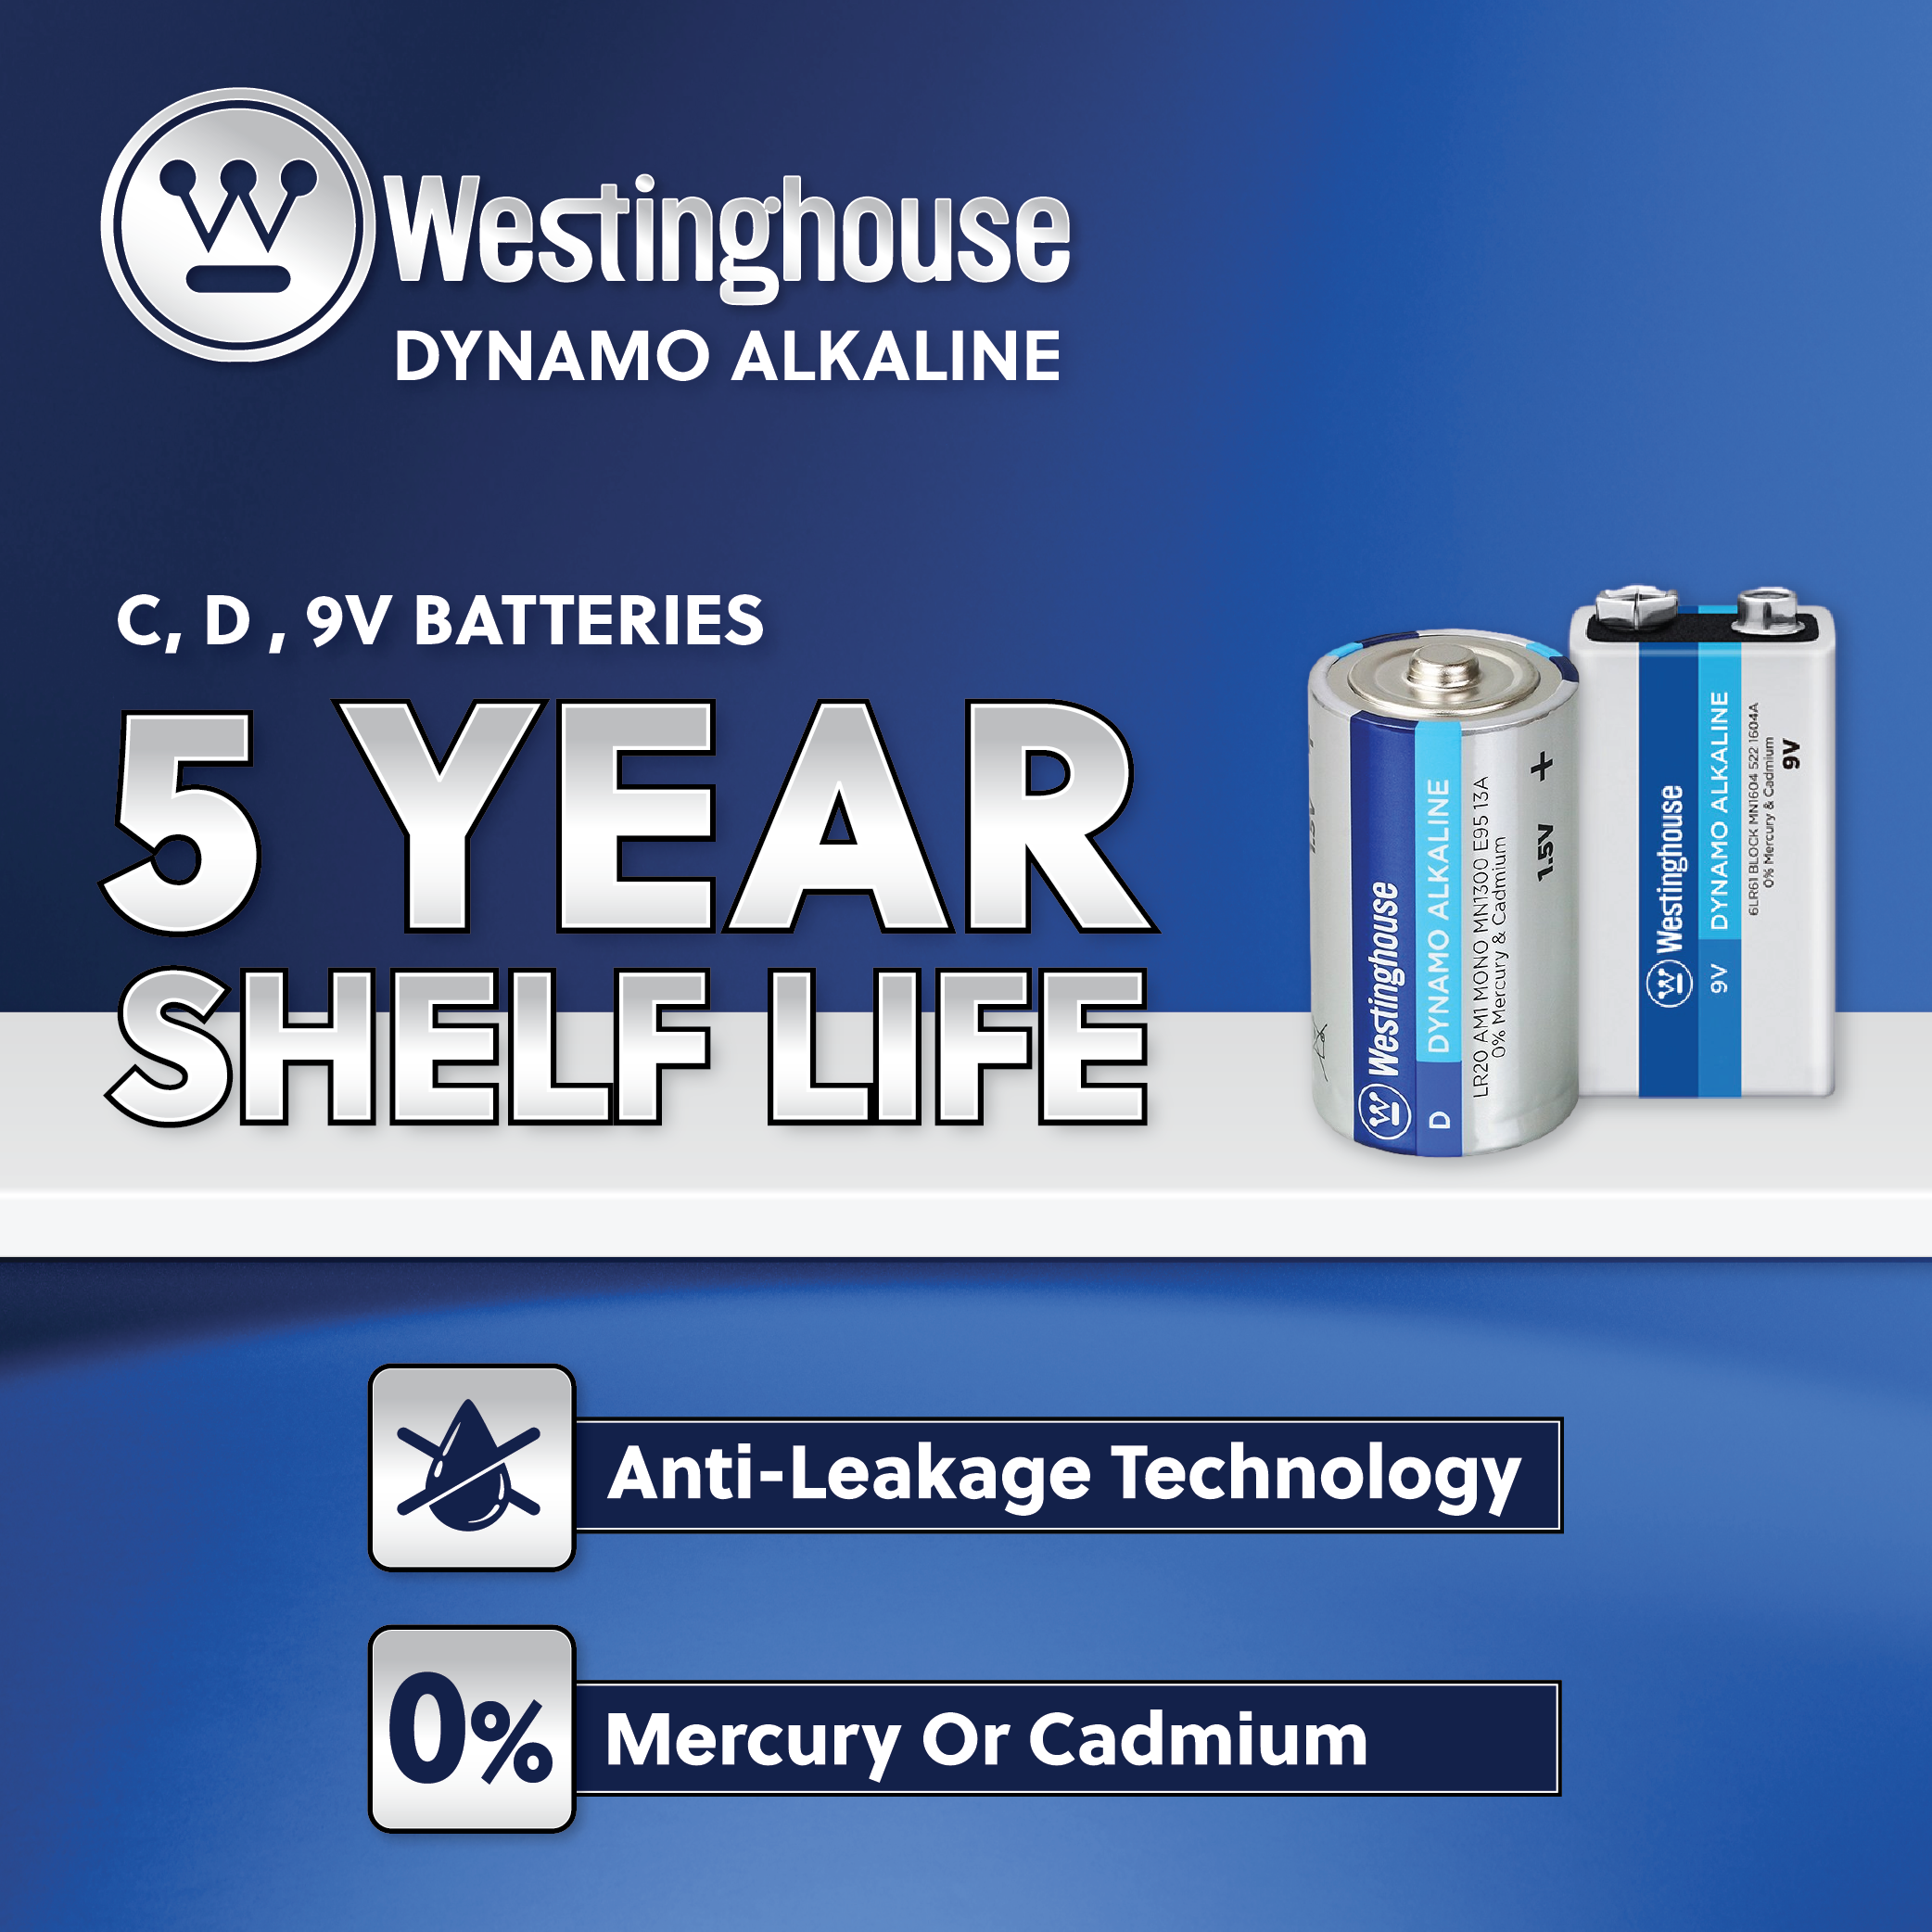 Westinghouse Dynamo Alkaline 96 pc. Battery Display